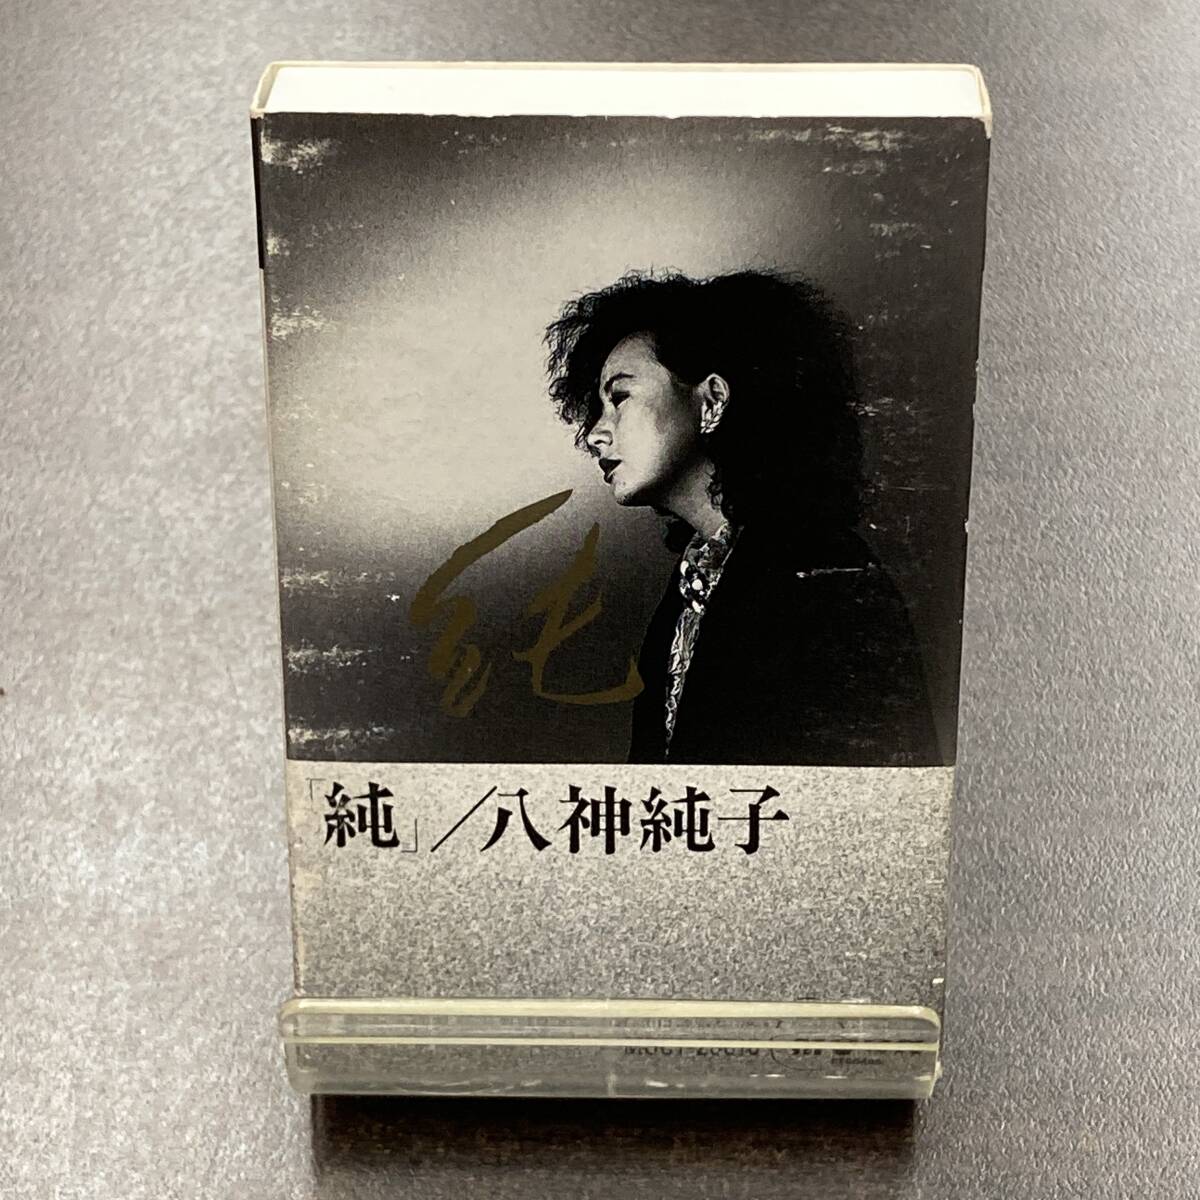 1153M 八神純子 「純」 カセットテープ / Jyunnko Yagami Citypop Cassette Tapeの画像1